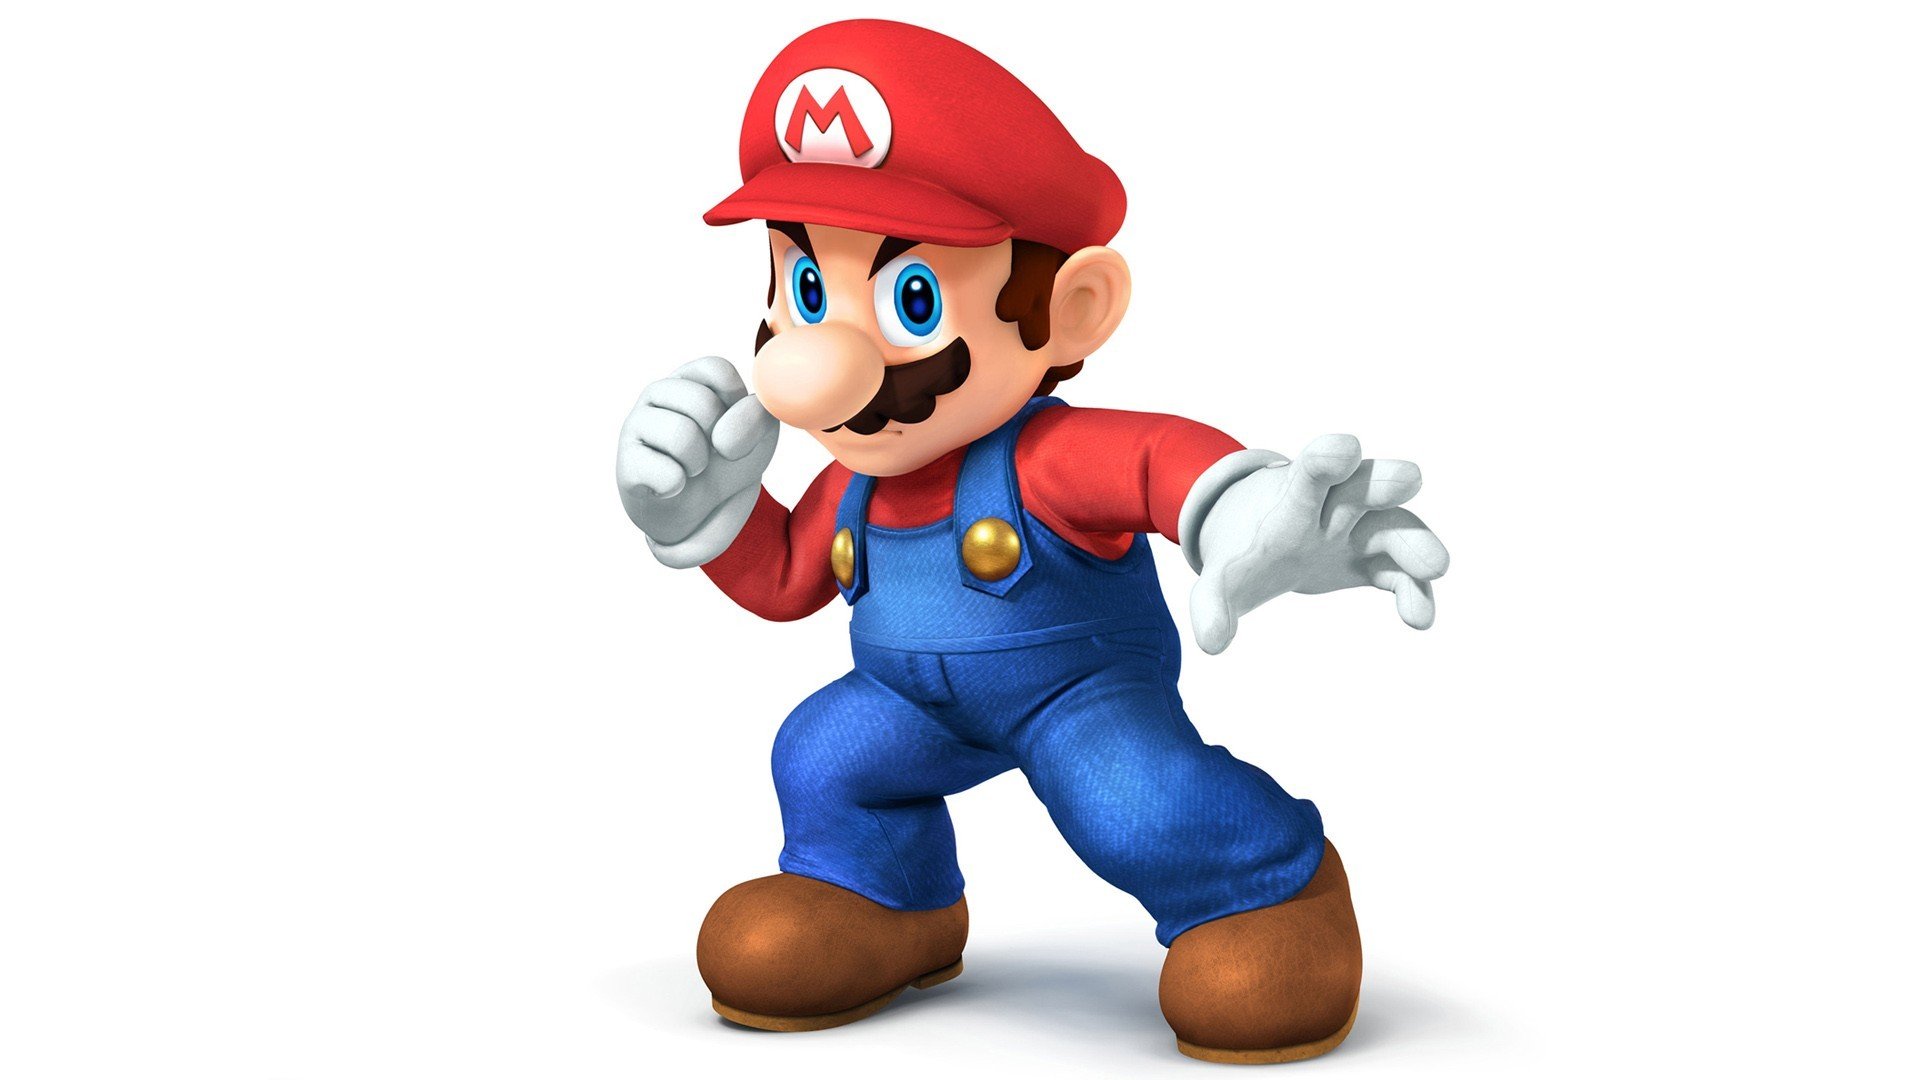 Mario bros theme